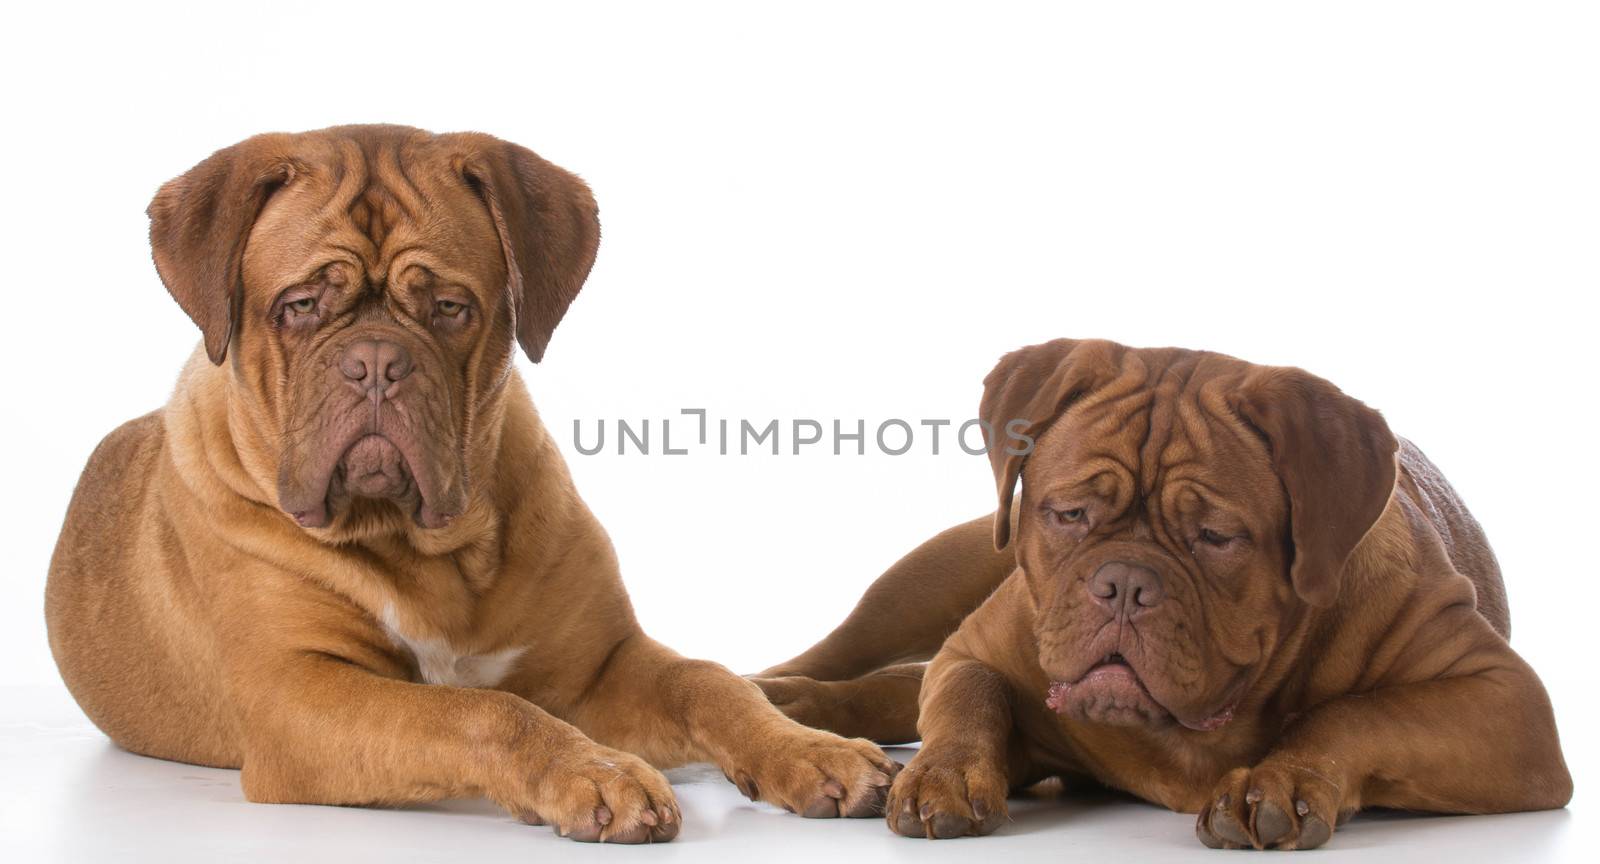 two dogue de bordeaux puppies on white background